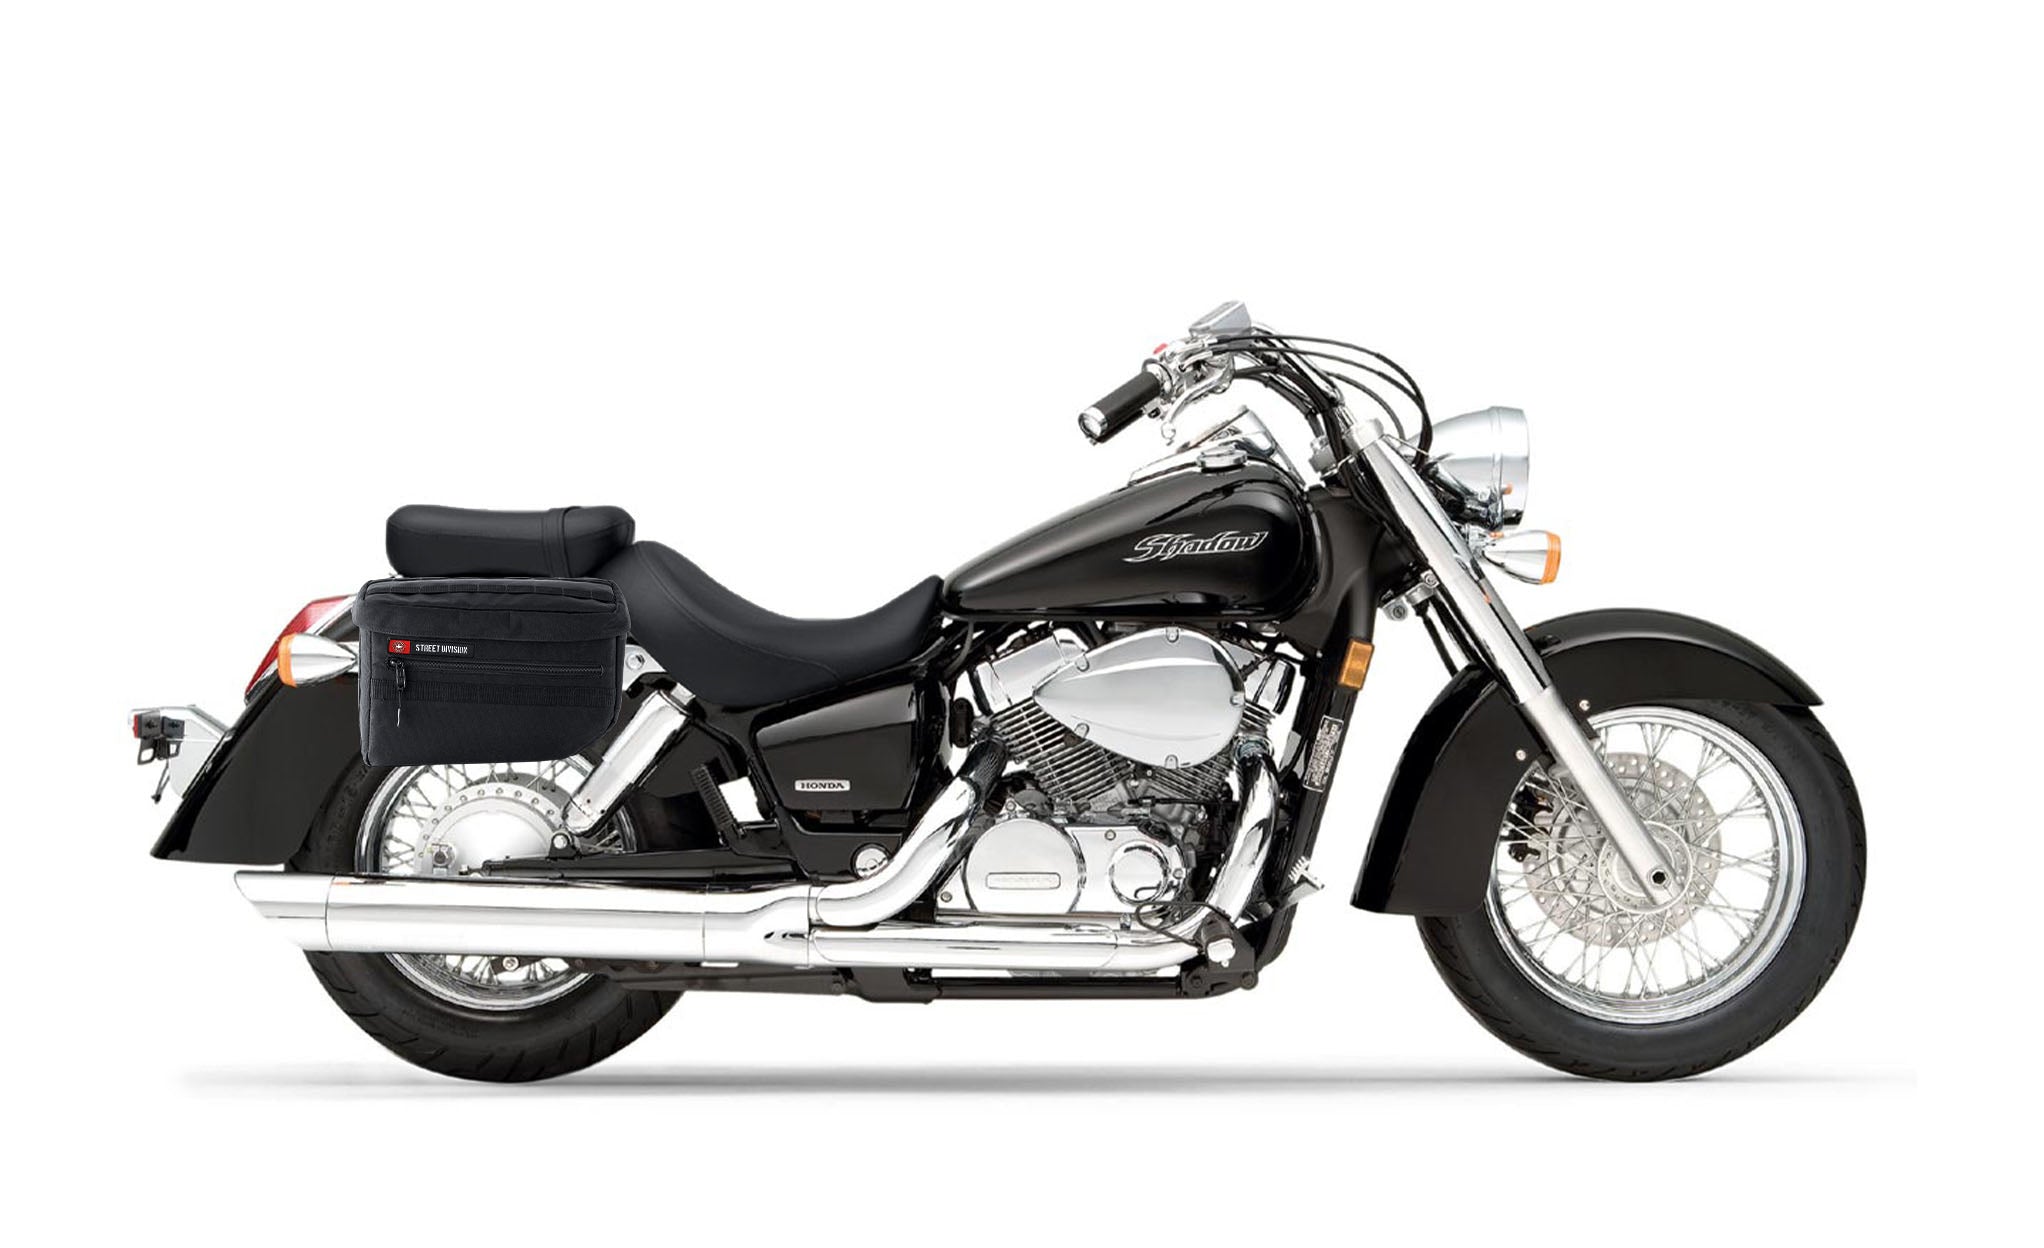 Viking Patriot Large Honda Shadow 750 Aero Motorcycle Throw Over Saddlebags on Bike Photo @expand